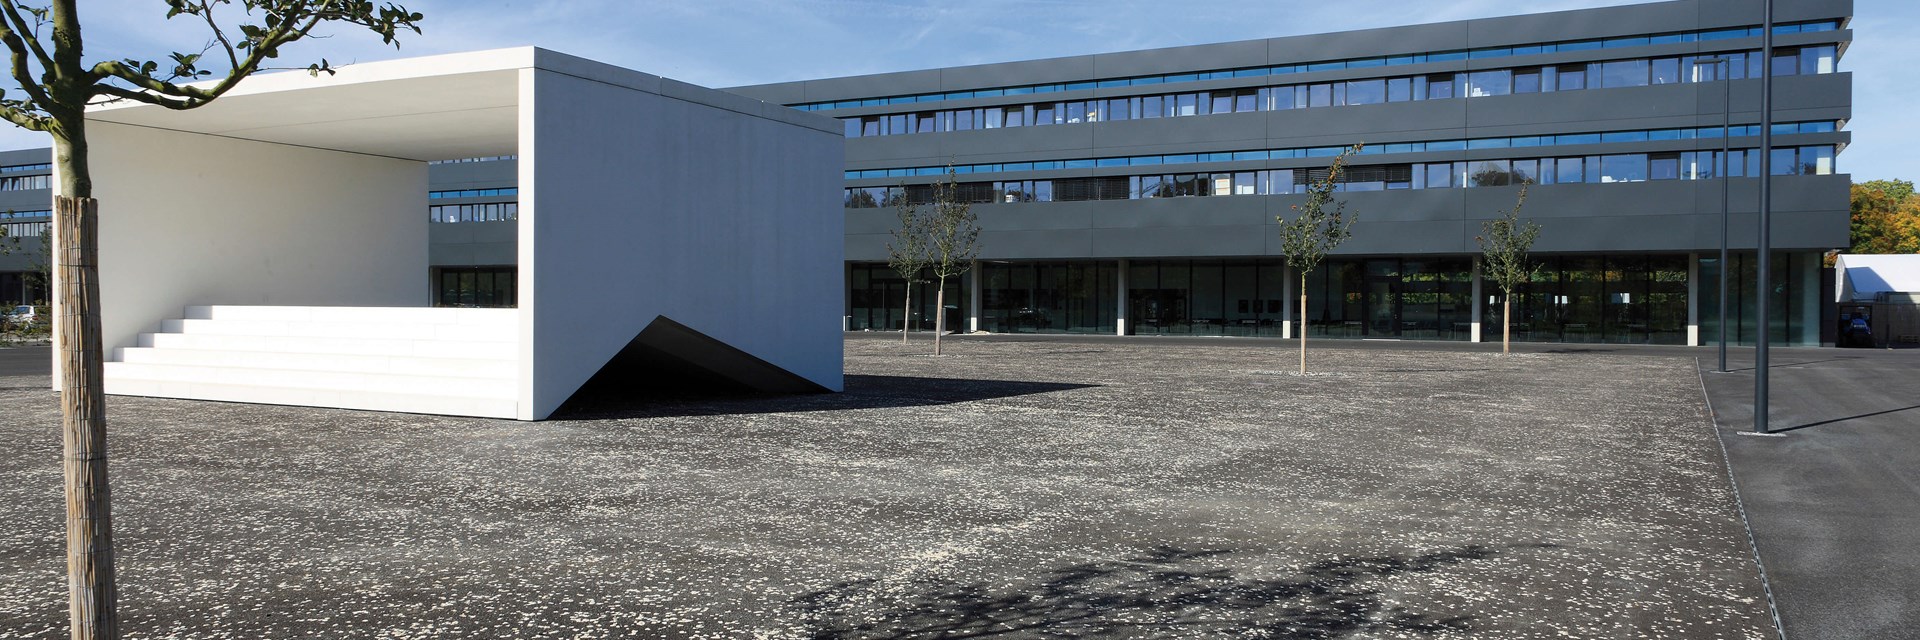 Fachhochschule Neu-Ulm